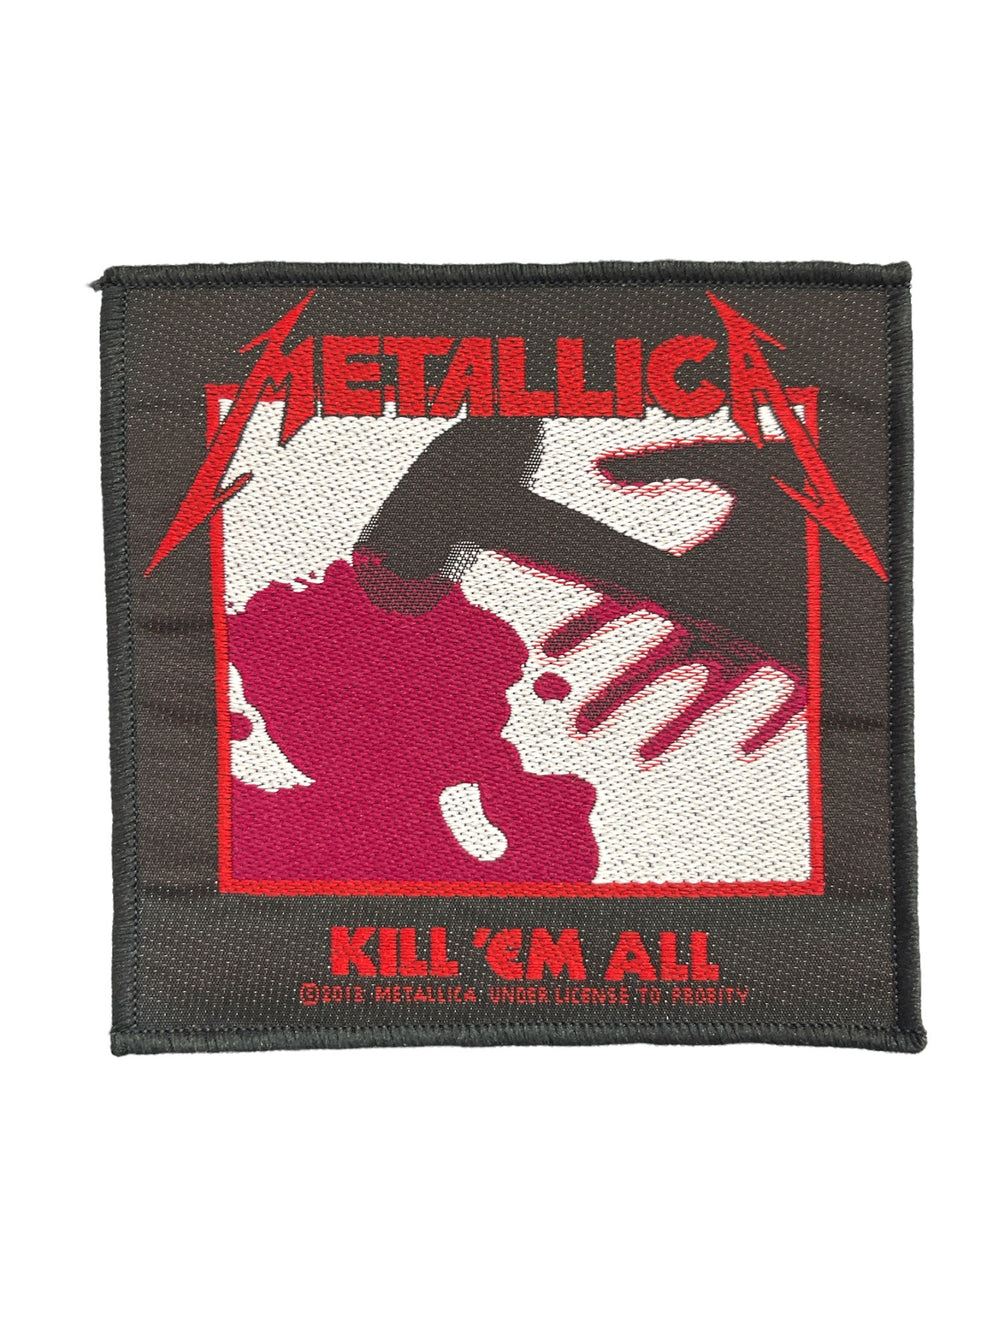 Metallica Kill Em All Official Woven Patch Brand New